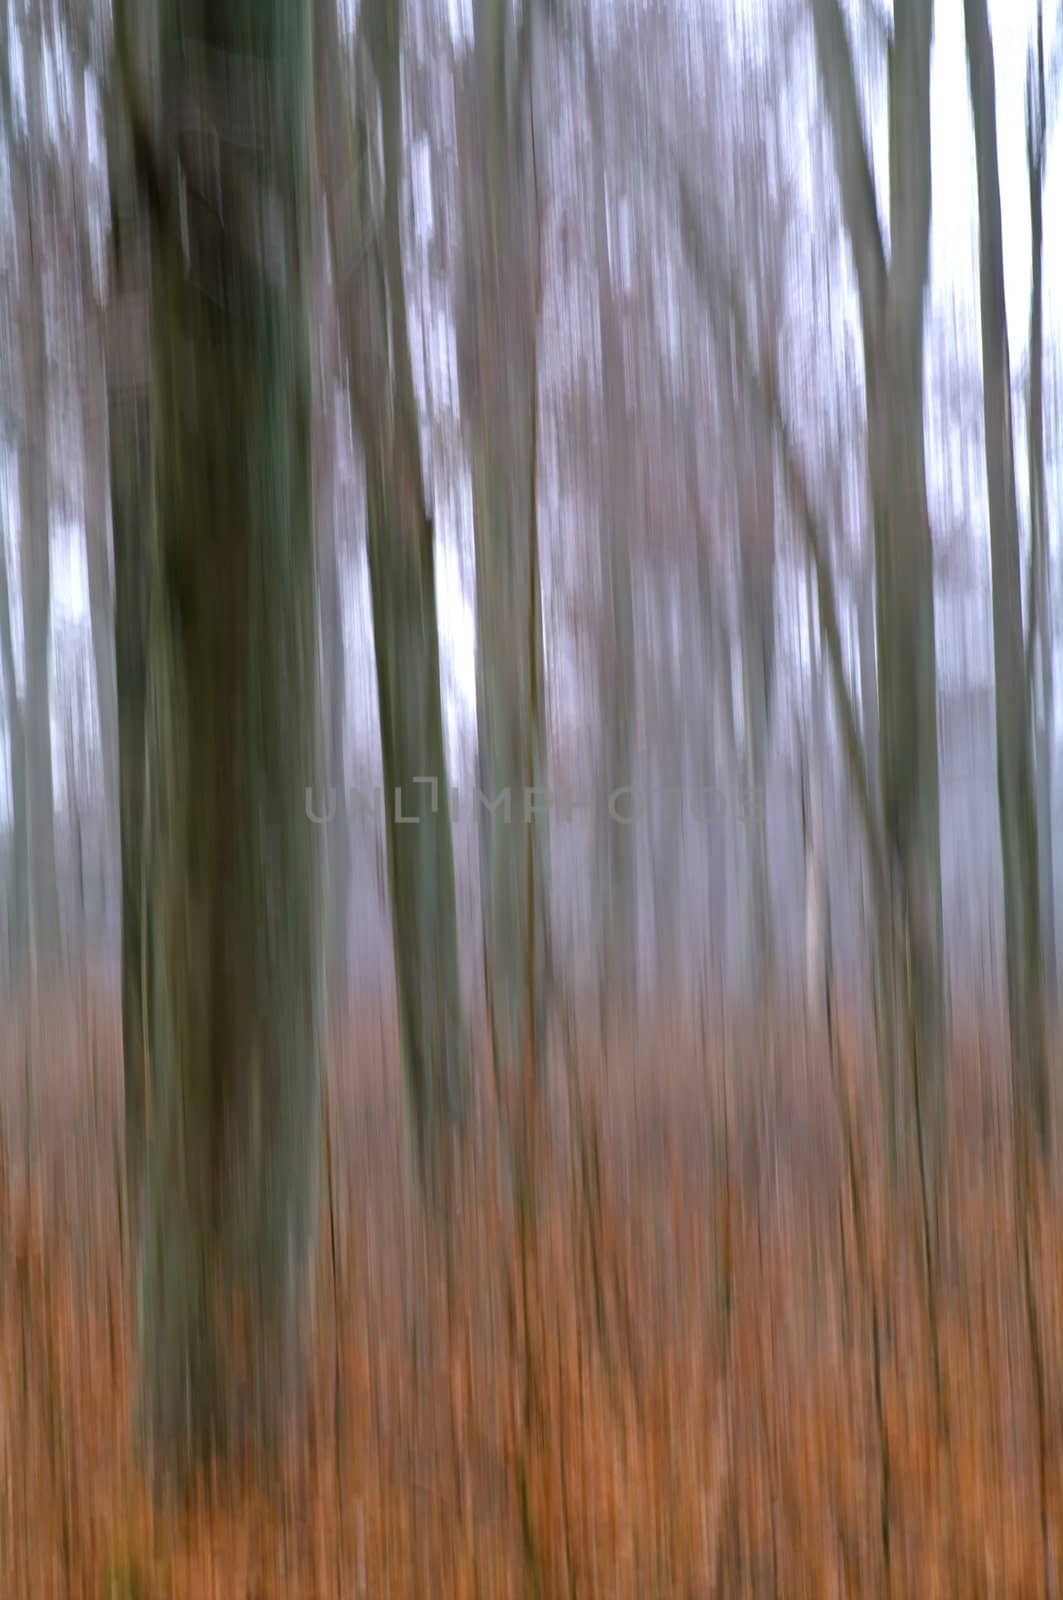 Beech trunks, movement blur by baggiovara